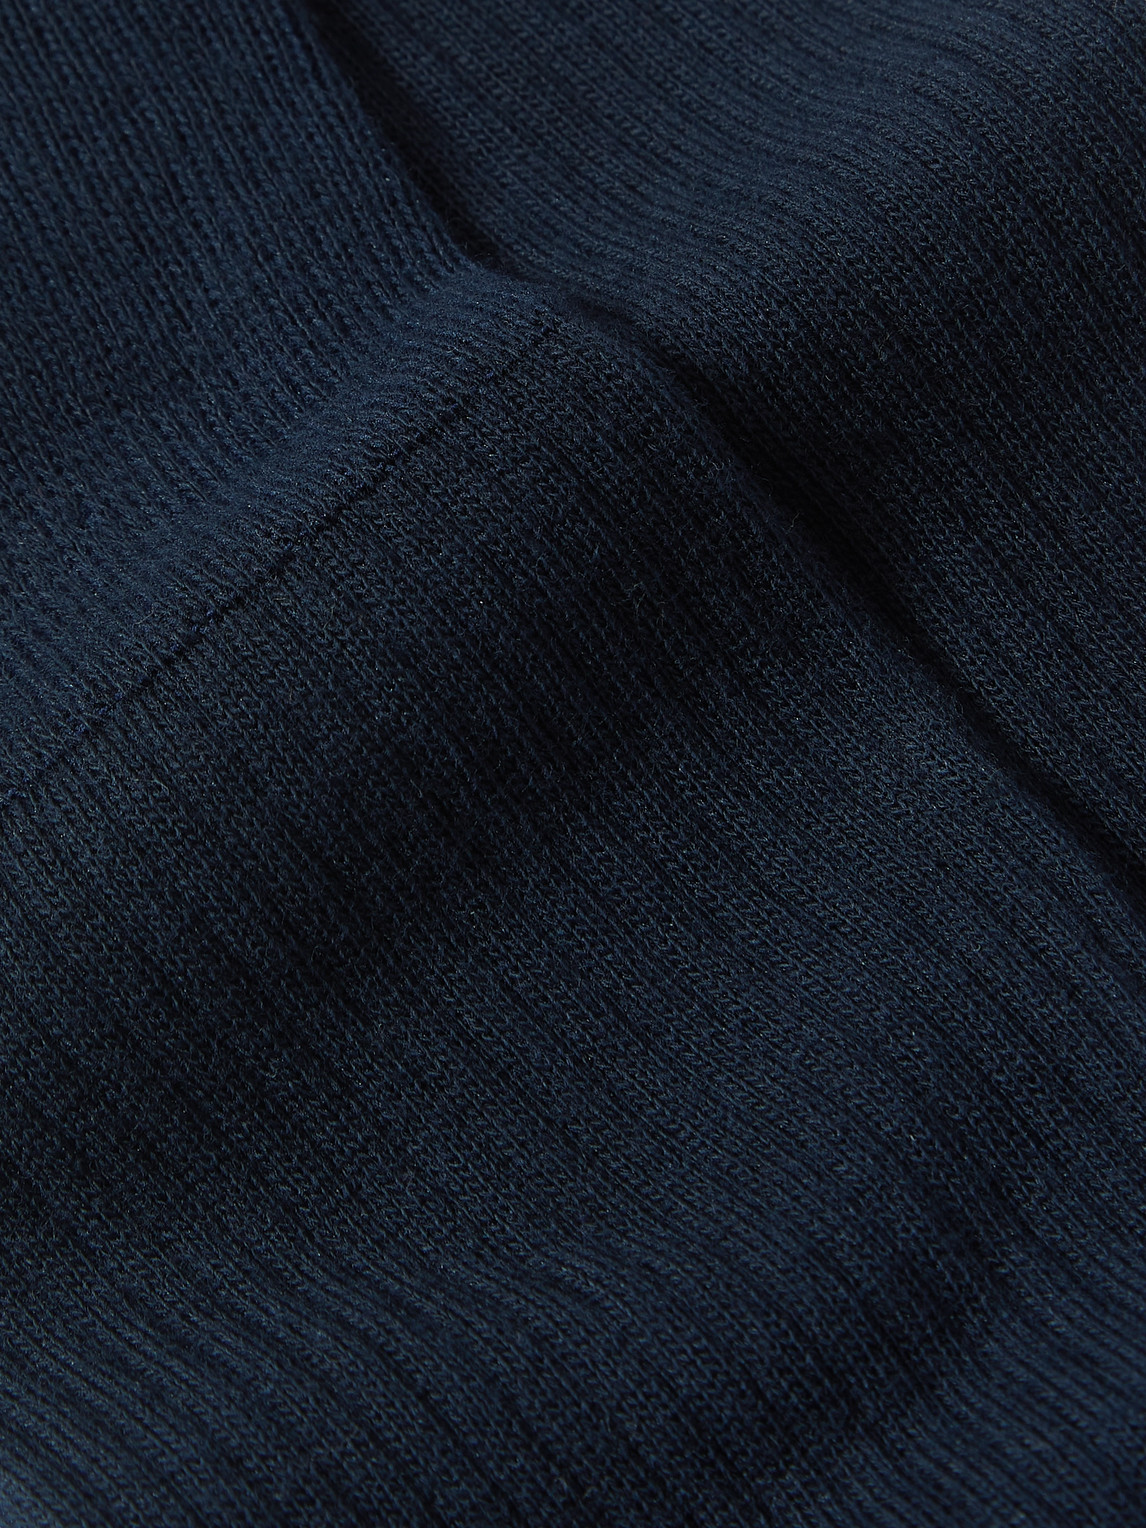 John Smedley | John Smedley - Edale Ribbed Cotton-Blend Socks - Men - Blue  - S/M | Shoppingscanner